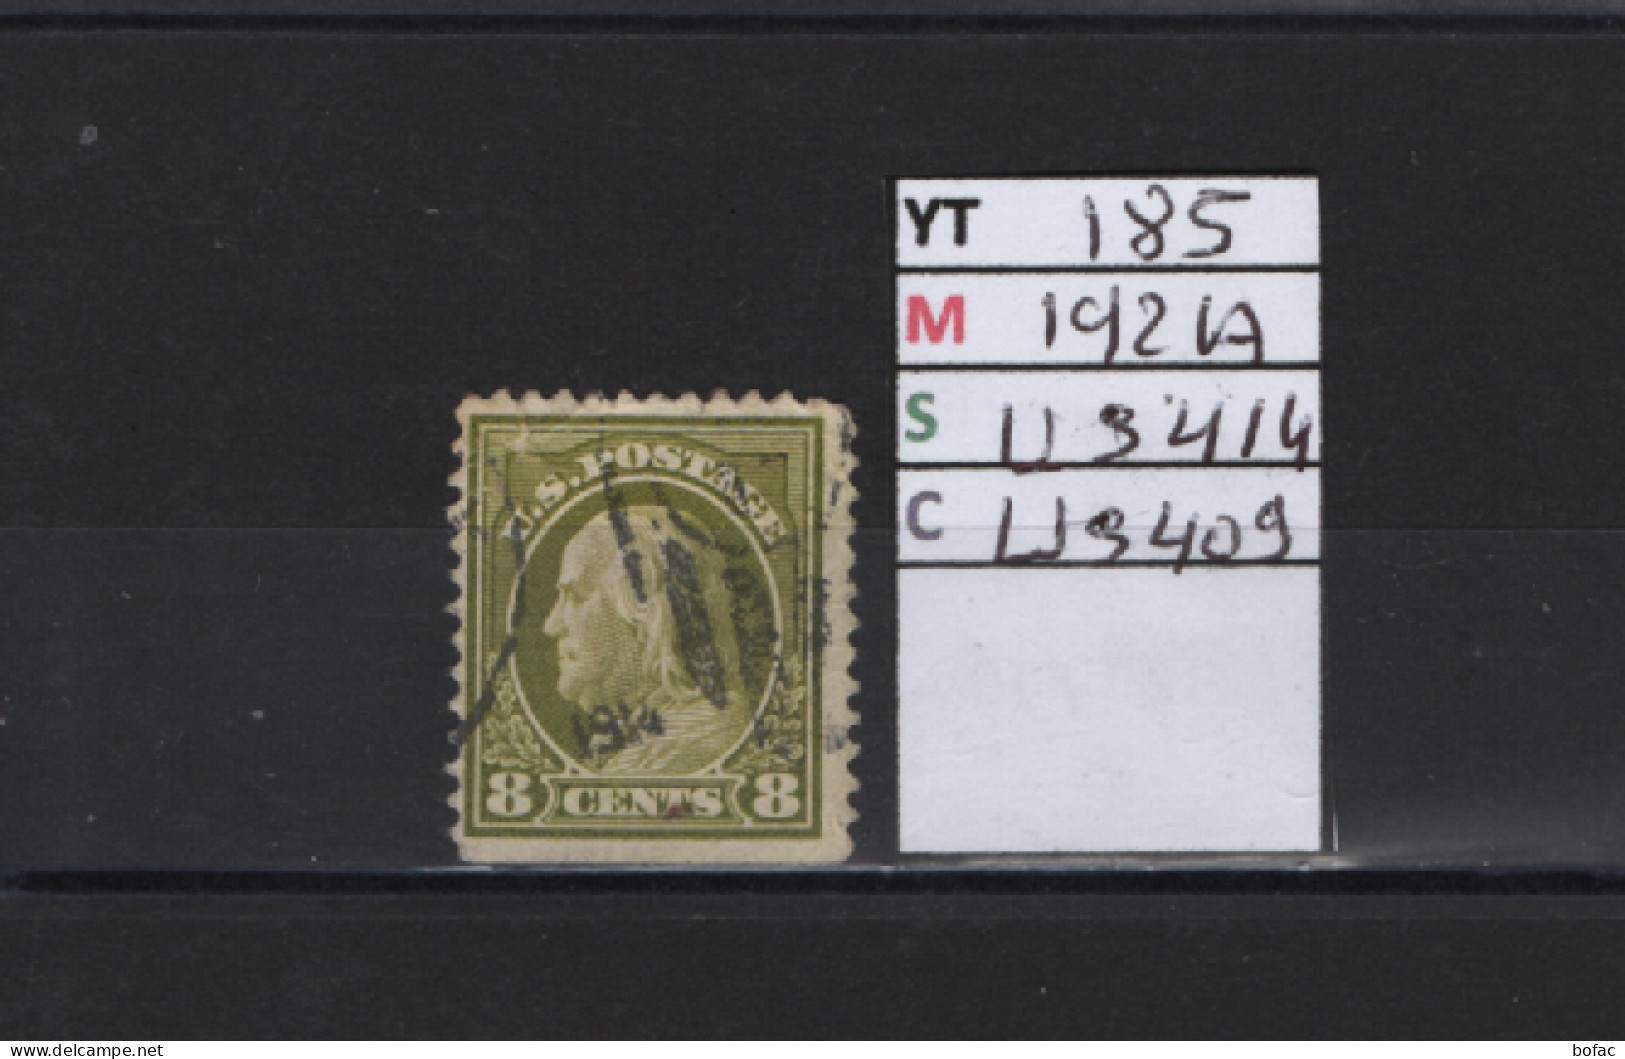 PRIX FIXE Obl 185 YT 192A MIC US414 SCOT US409 GIB Benjamin Franklin  1912 1915 Etats Unis 58/06 Dentelé 3 Cotés - Used Stamps